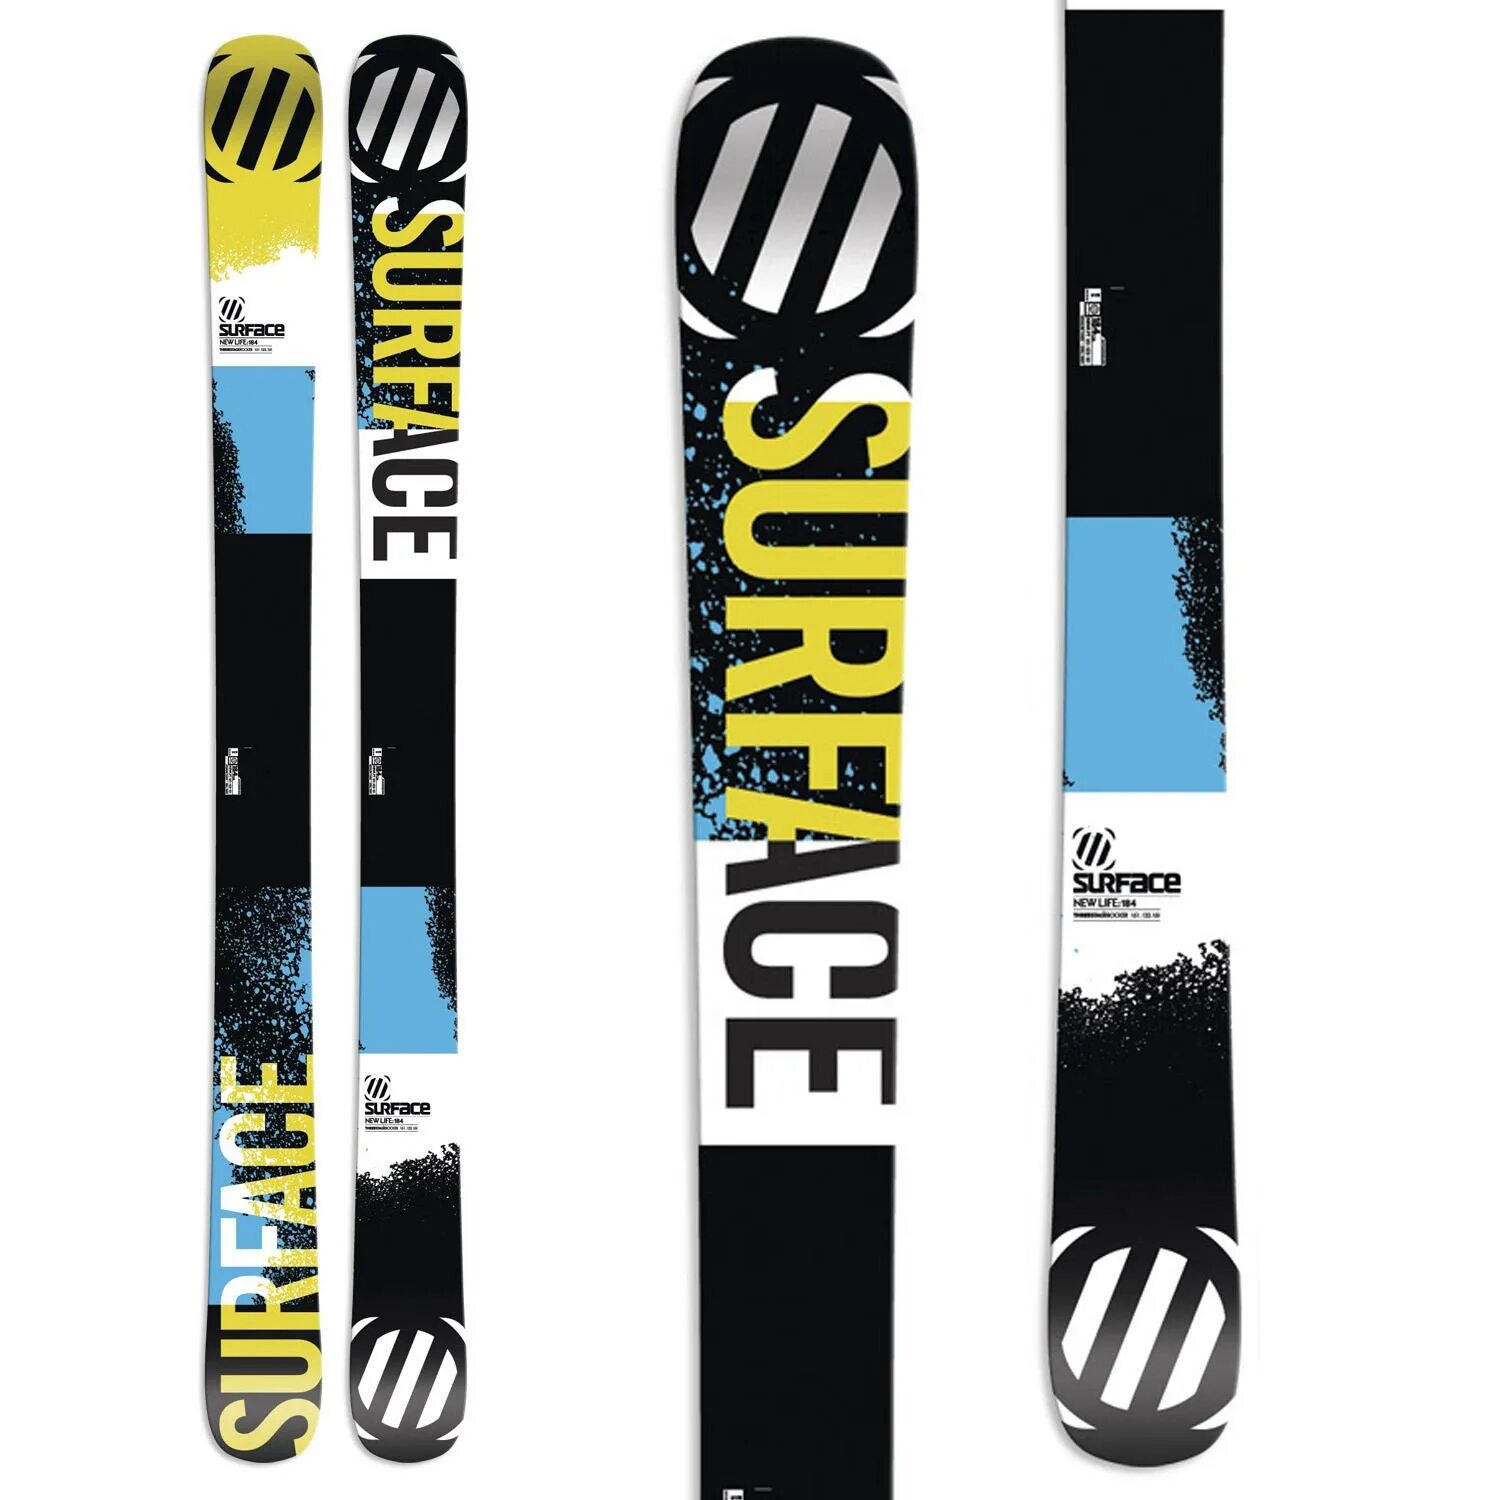 Surface 0.37 горные лыжи. Surface next Life горные лыжи. Горные лыжи surface save Life. Surface Outsider горные лыжи 2015. Ski life